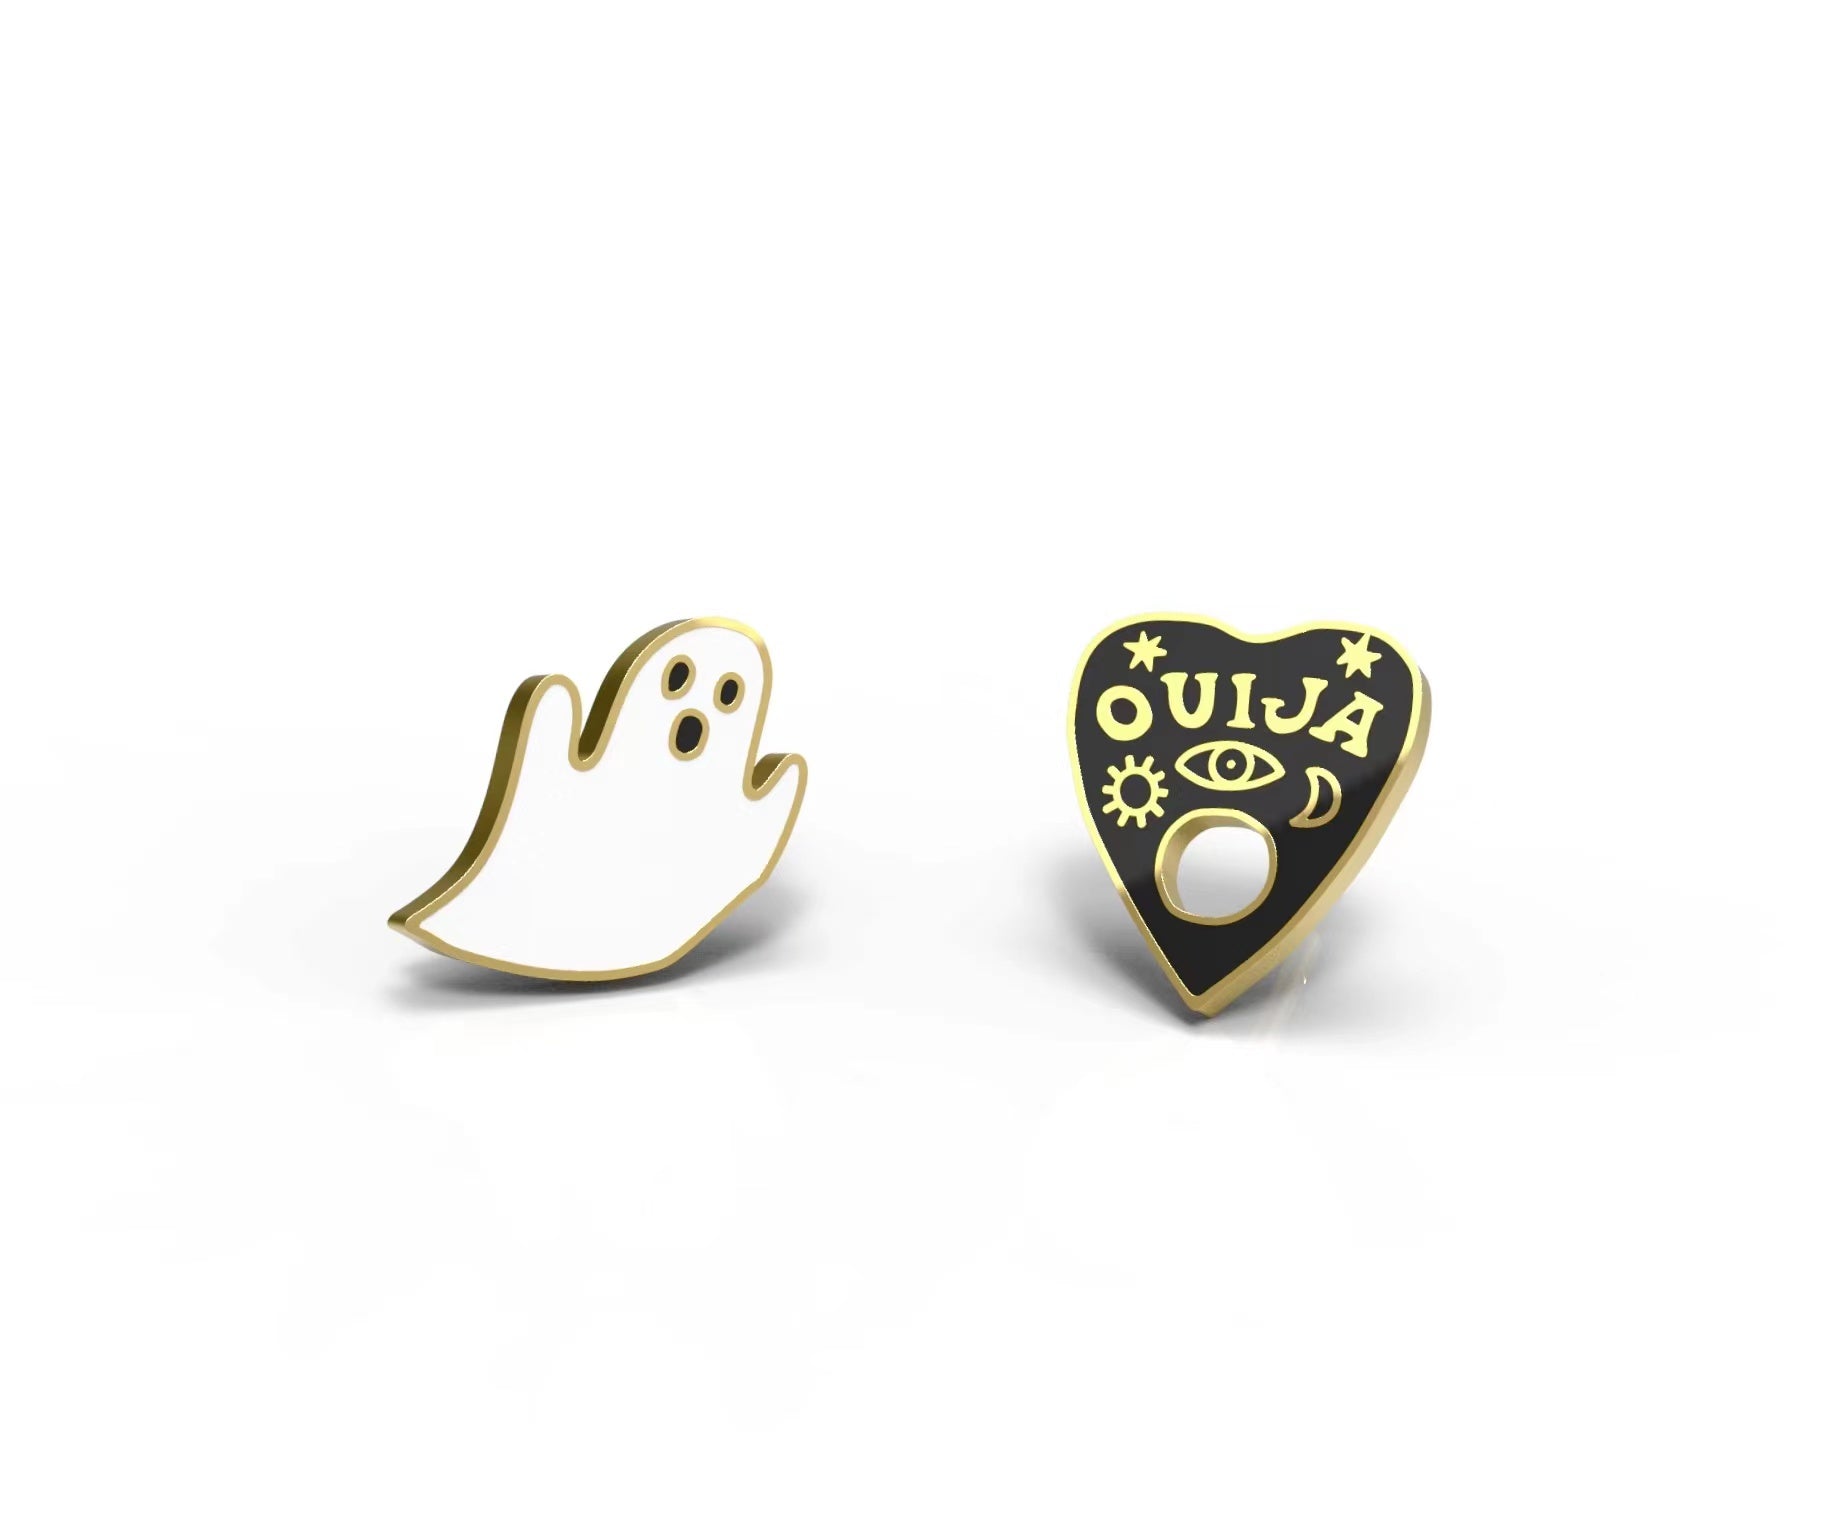 Ghost & Ouija Earrings - Yellow Owl Workshop